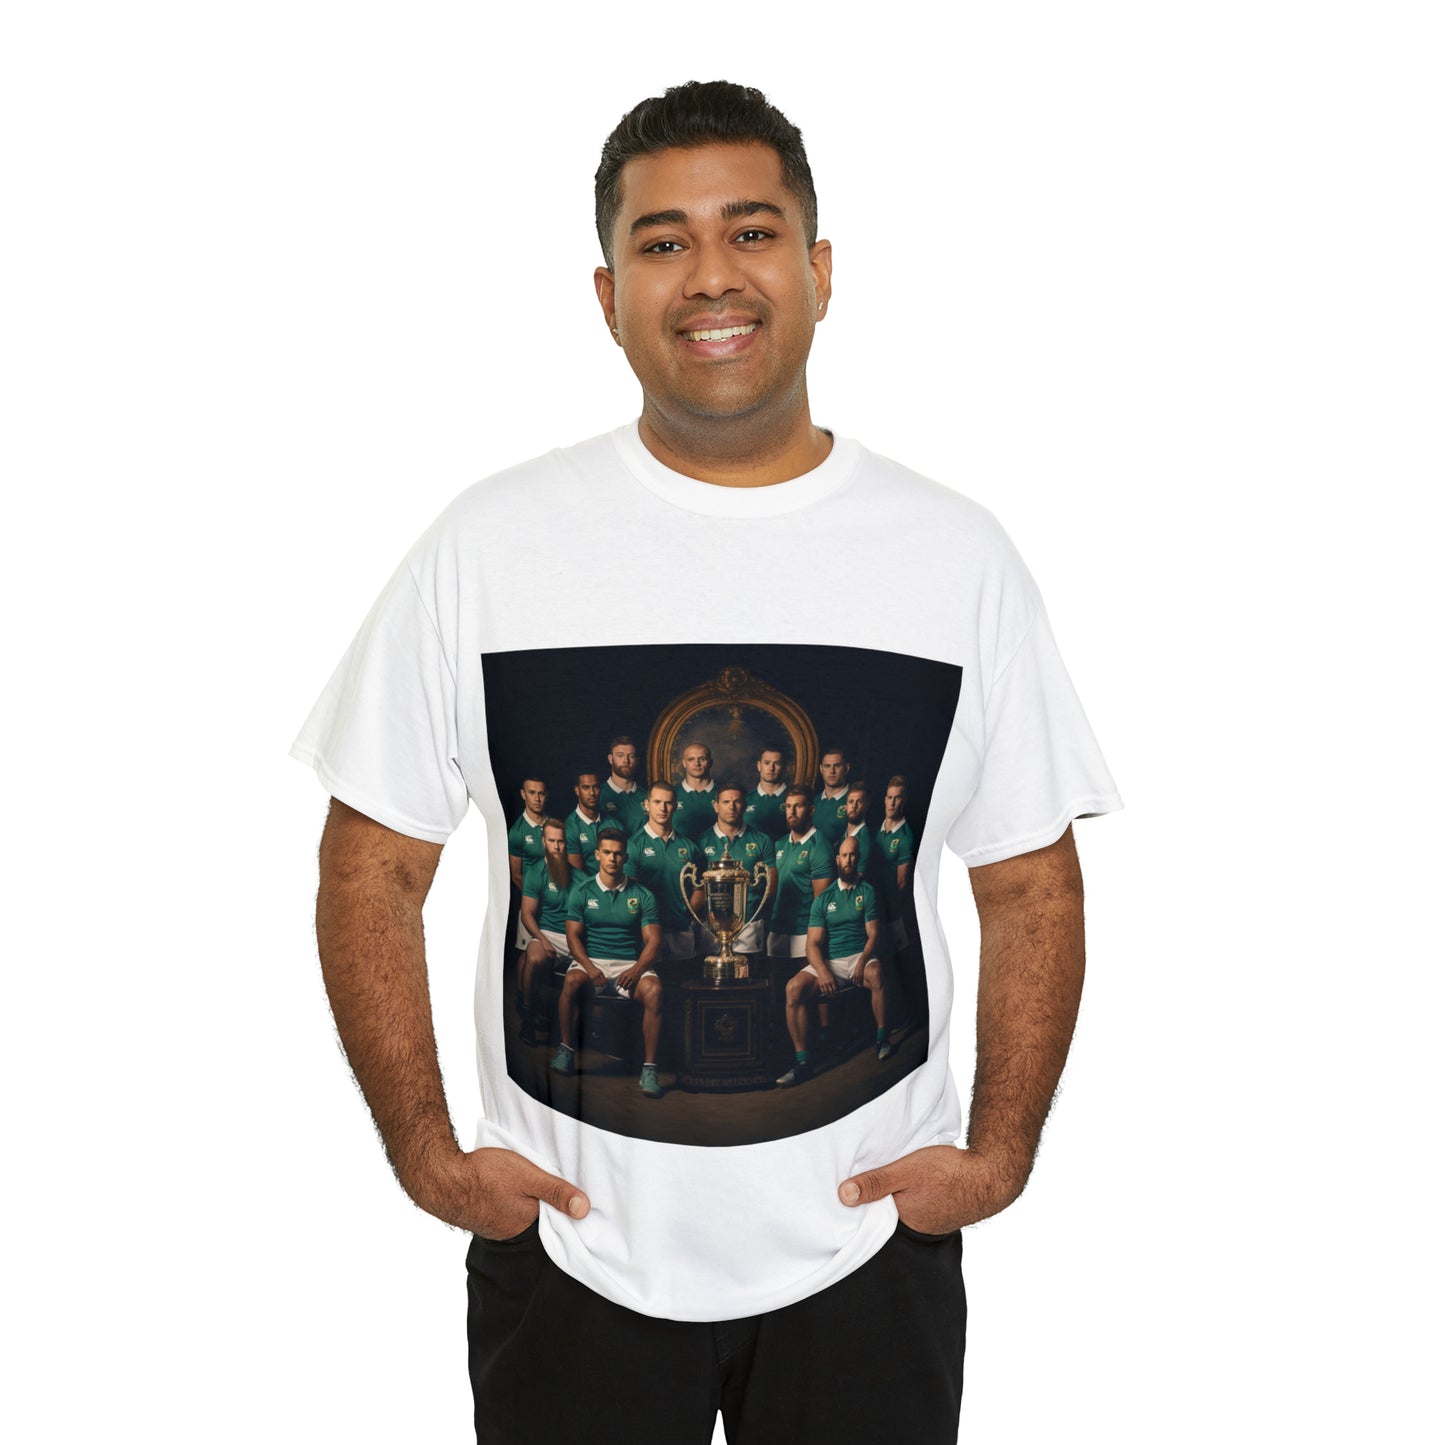 Ireland World Cup photoshoot - light shirts